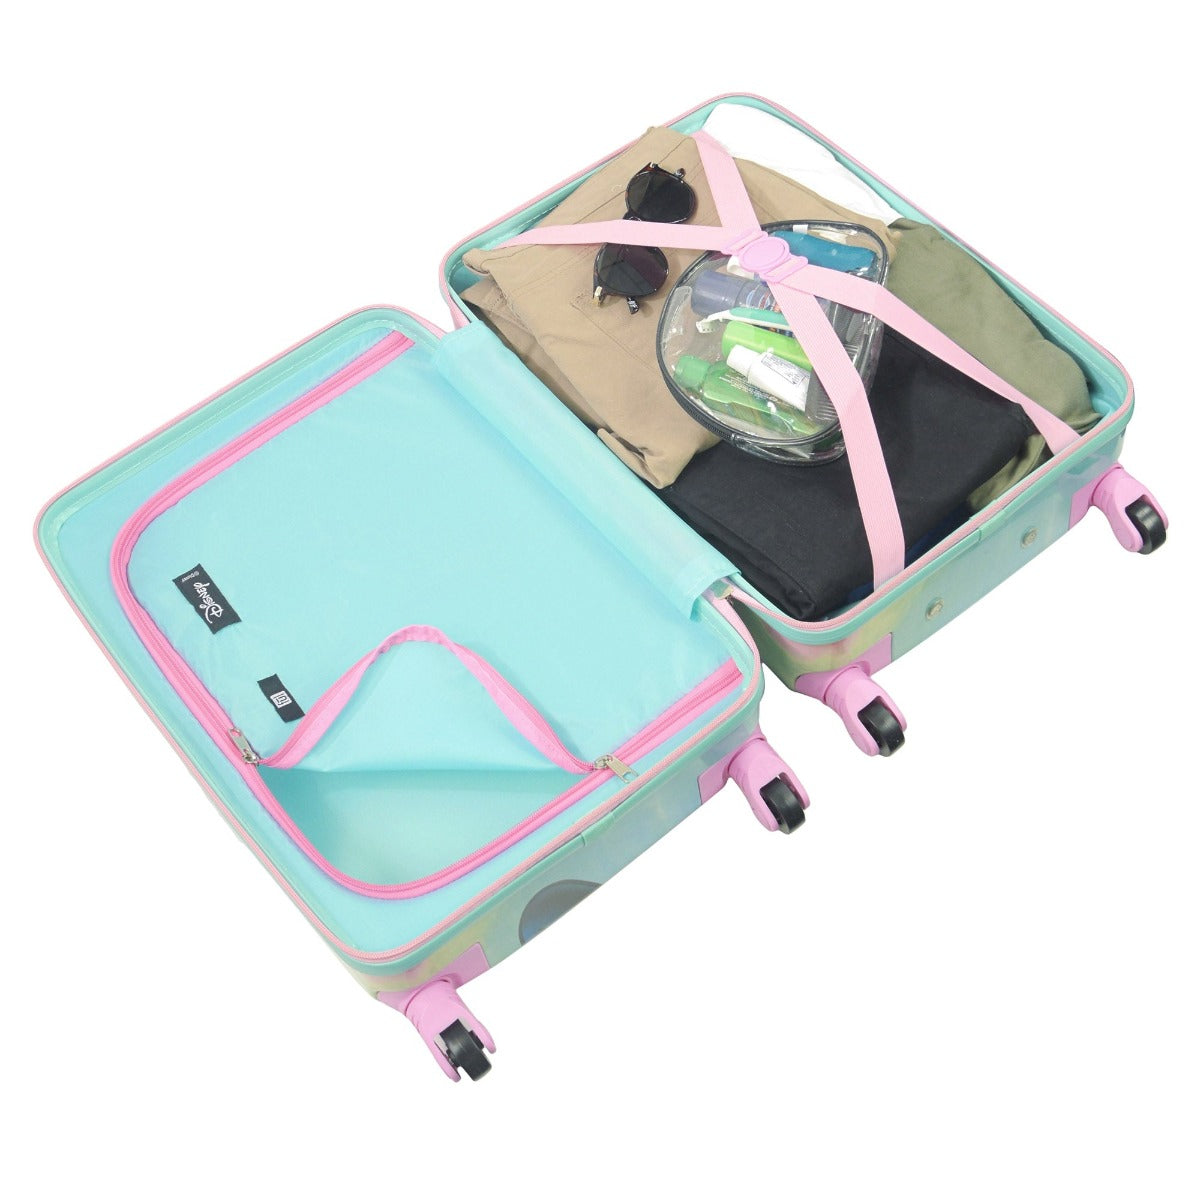 Disney Minnie Mouse Tye Dye Kids 21 Carry On Spinner Luggage